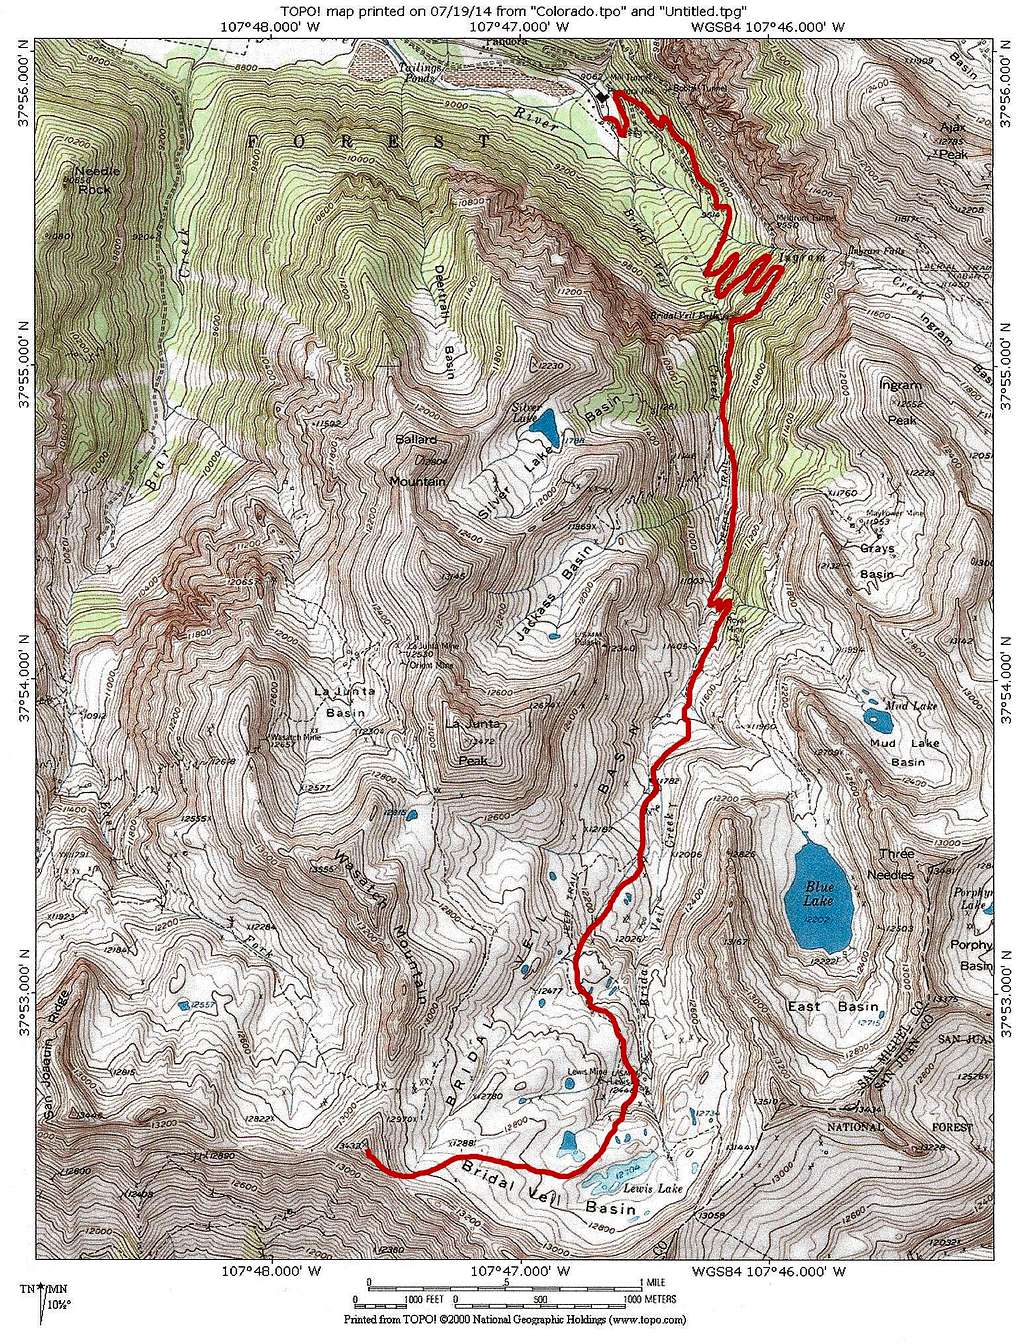 Northeast approach to Oscars Peak via Bridal Veil Basin